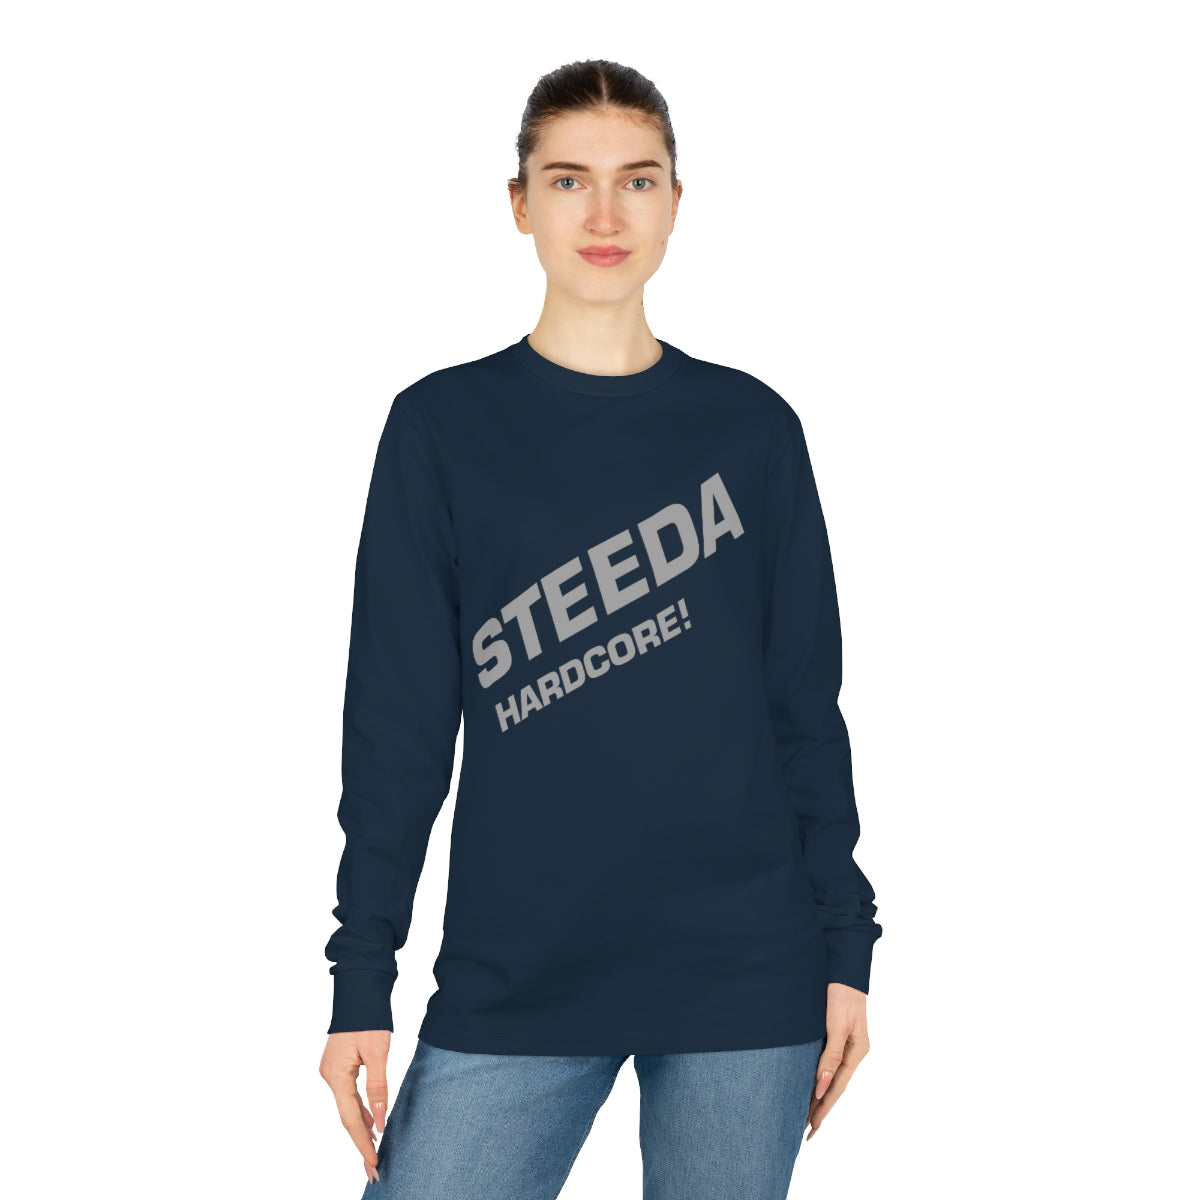 Steeda Unisex "Hardcore!" Μακρυμάνικο μπλουζάκι - Μαύρο / Ναυτικό